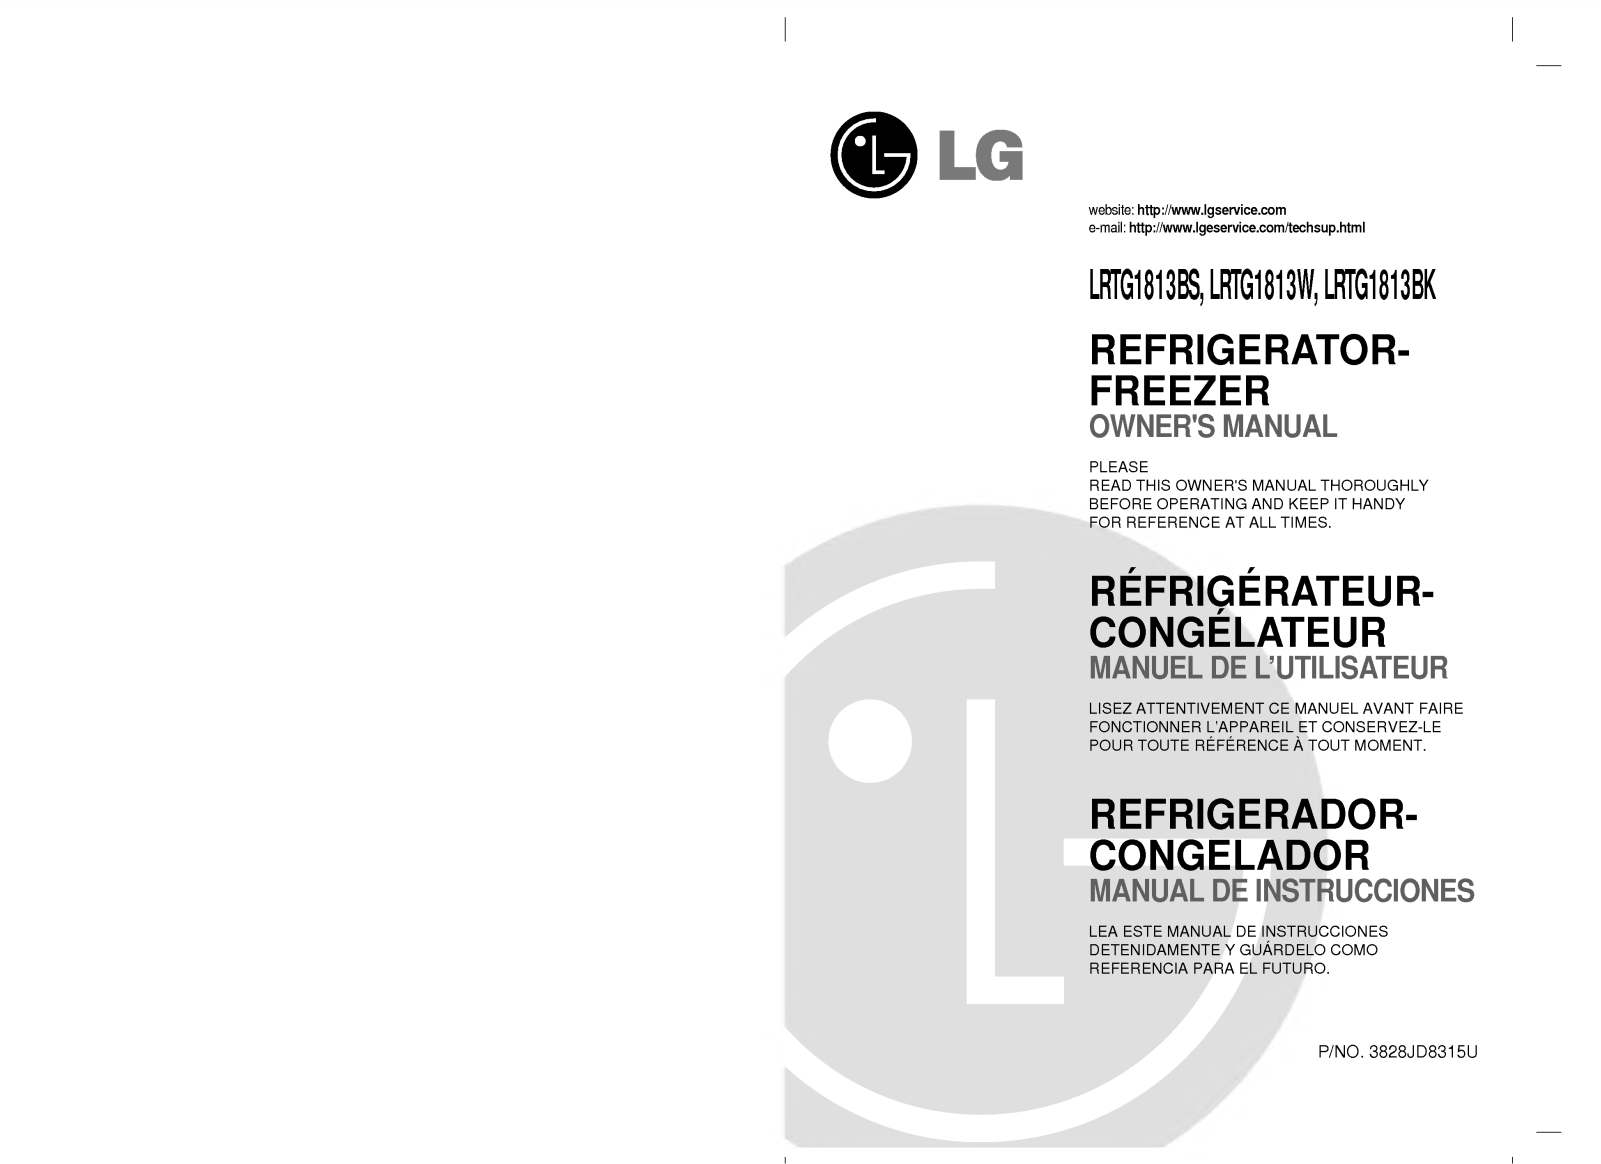 LG LRTG1813BK, LRTG1813W User Manual